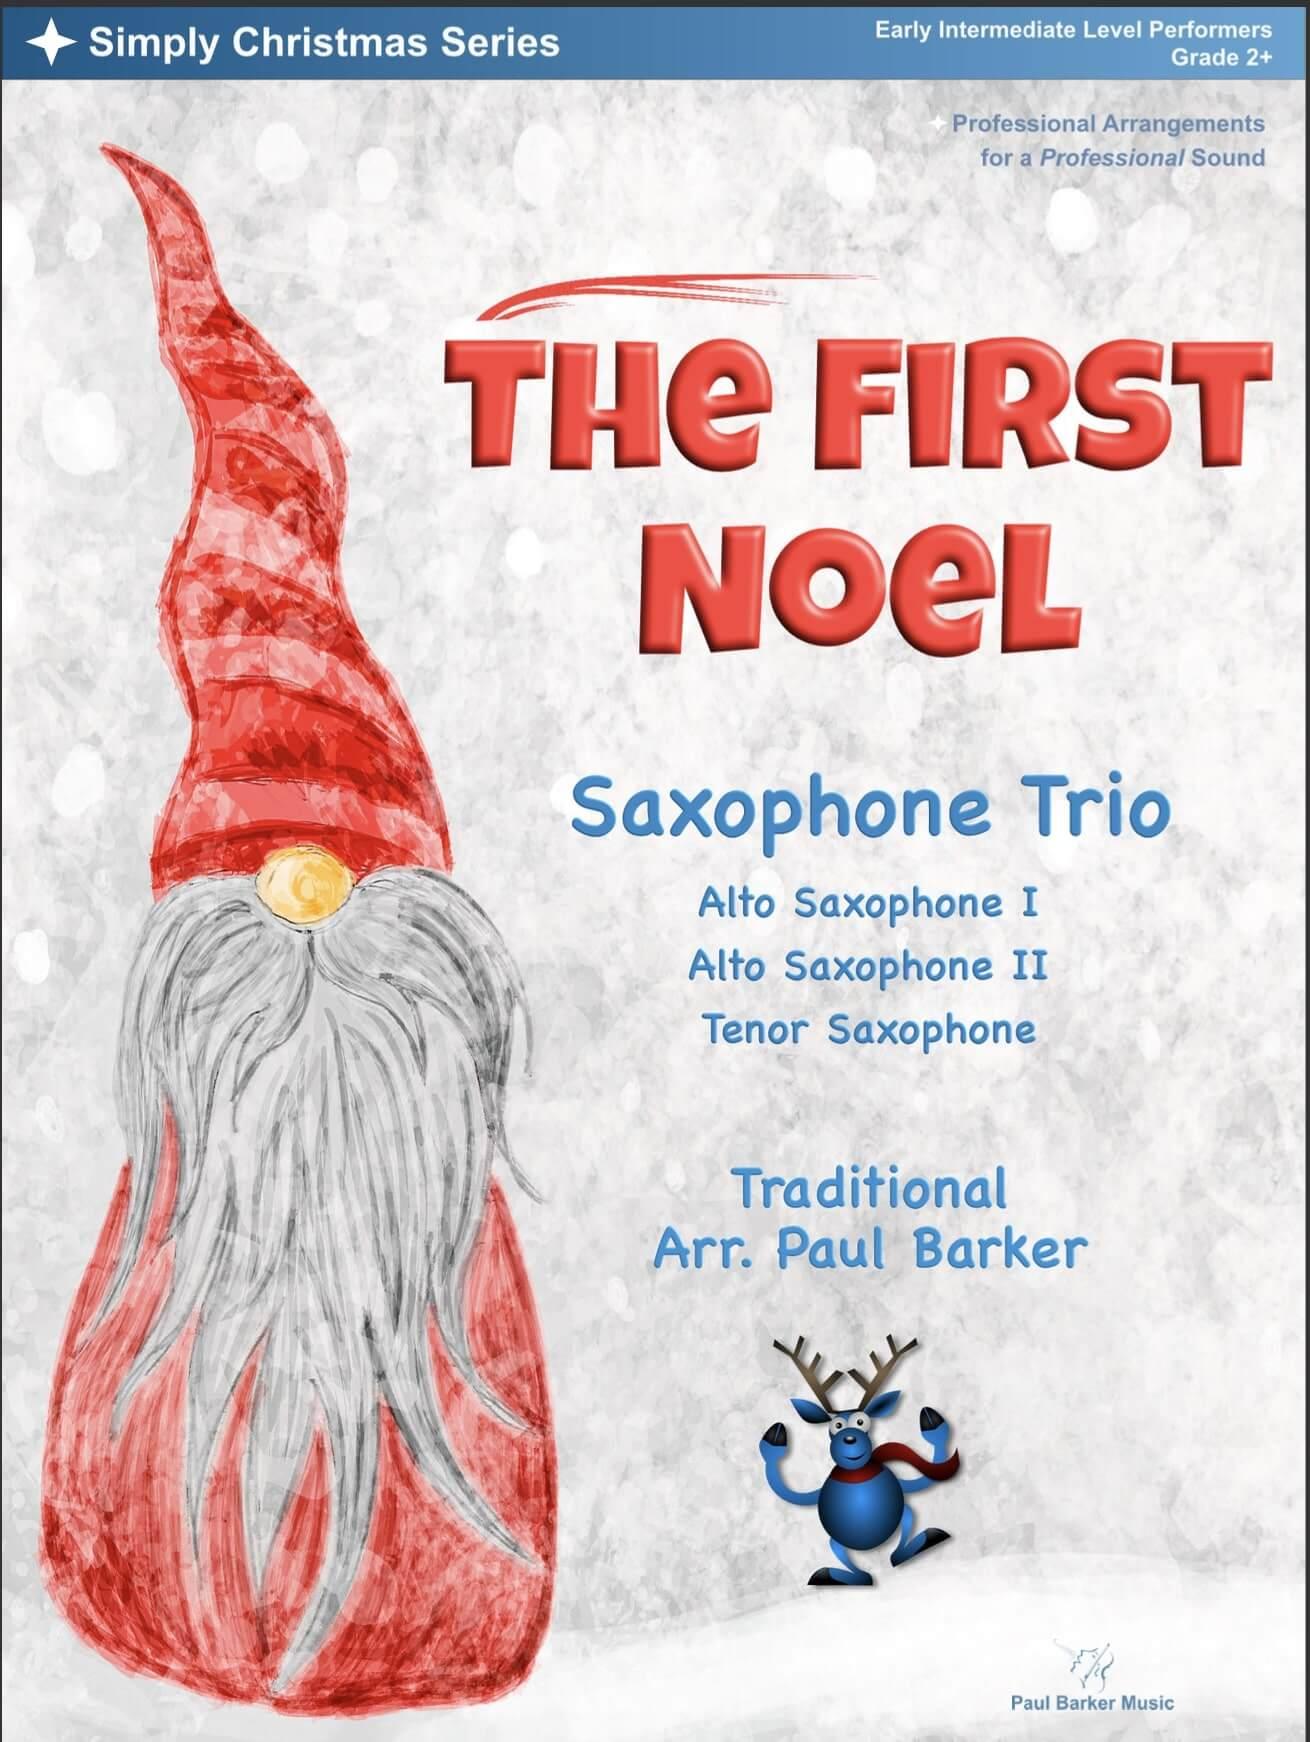 The First Noel (Saxophone Trio) - Paul Barker Music 